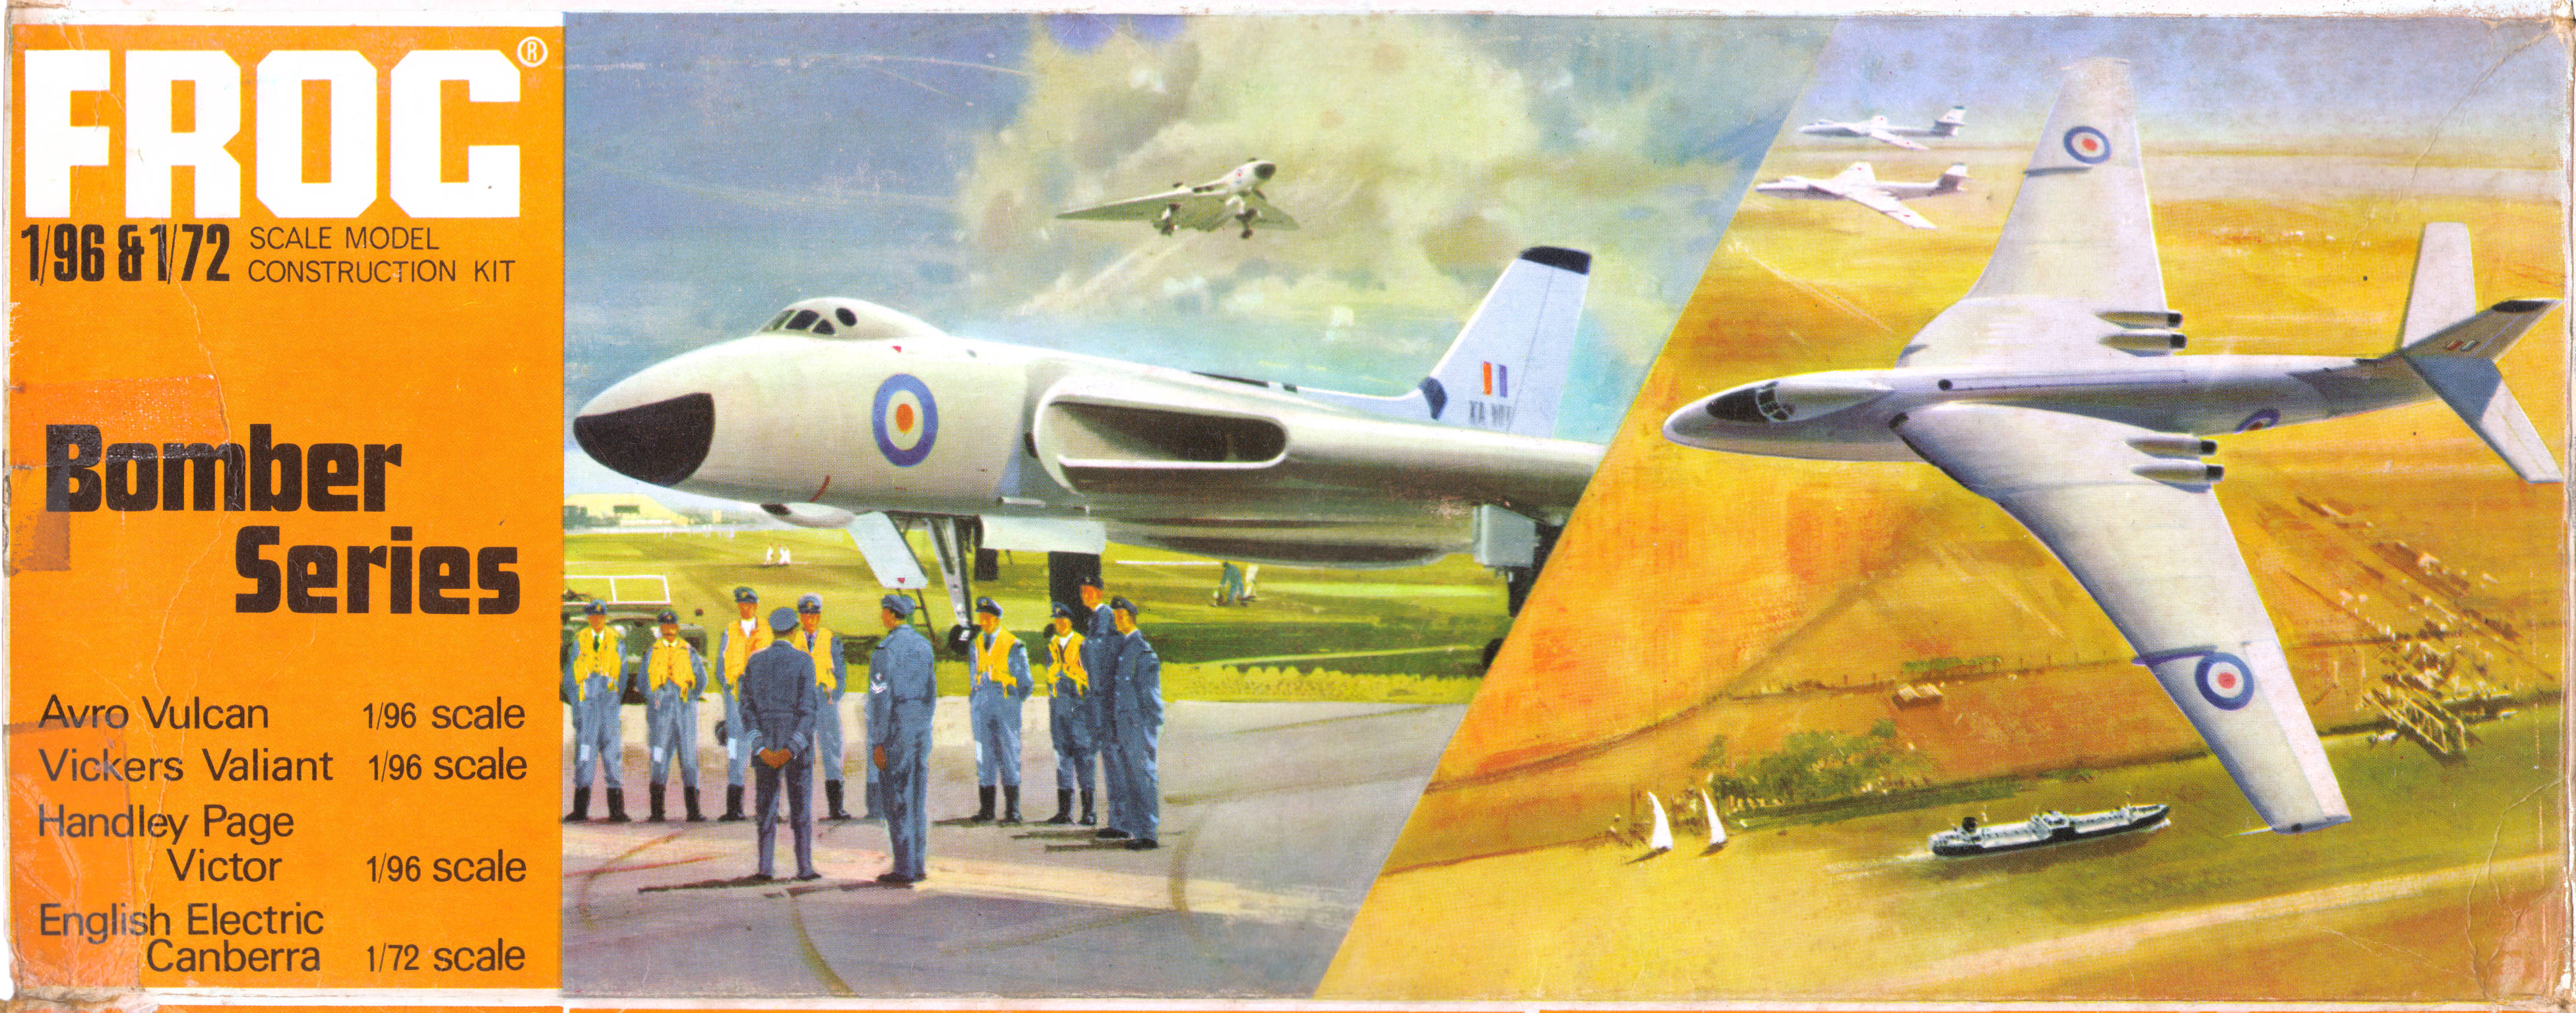 Верх коробки Tri-ang F353 Vickers Valiant, Tri-ang Pedigree (N.Z.) Ltd., 1969-70